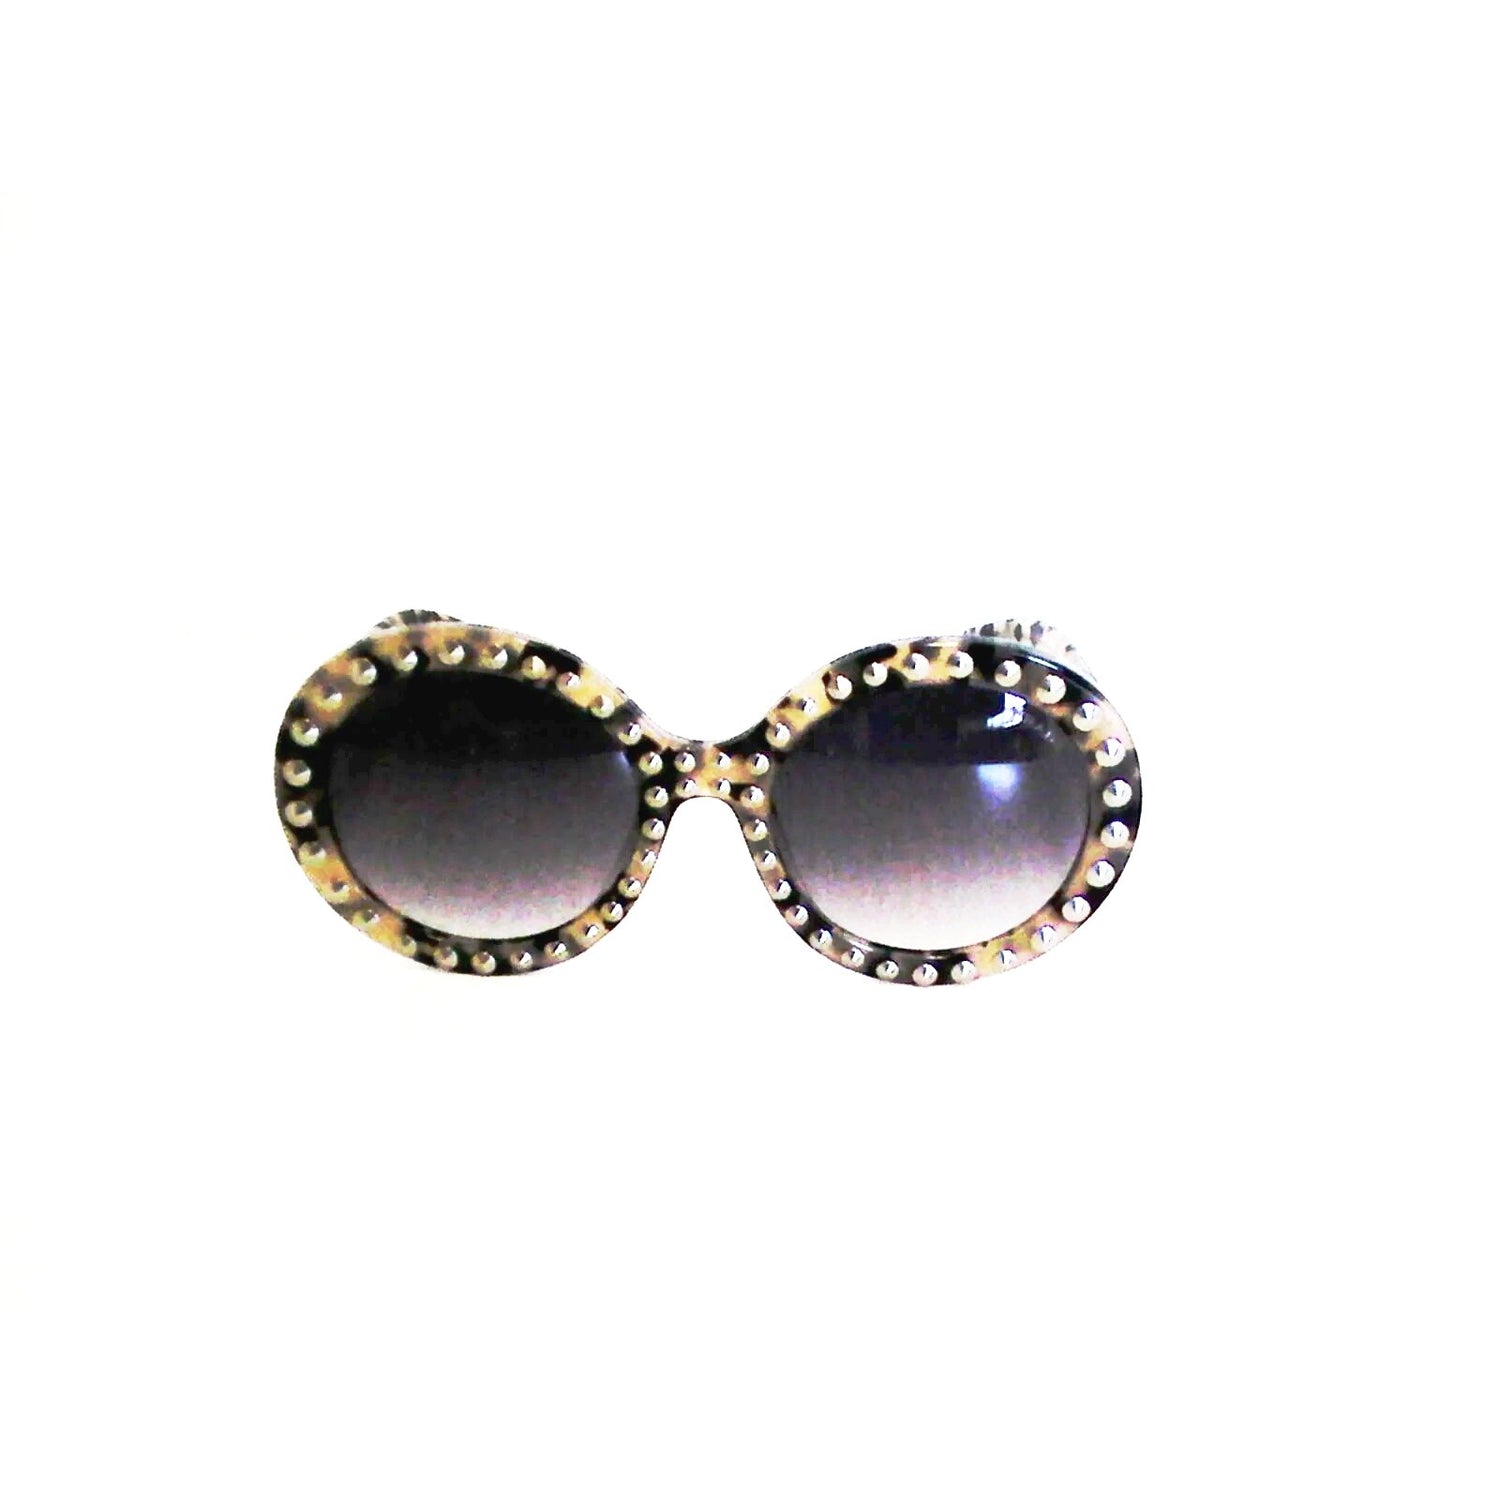 Womens PRADA New sunglasses black beige studded Baroque SPR29QSK authentic